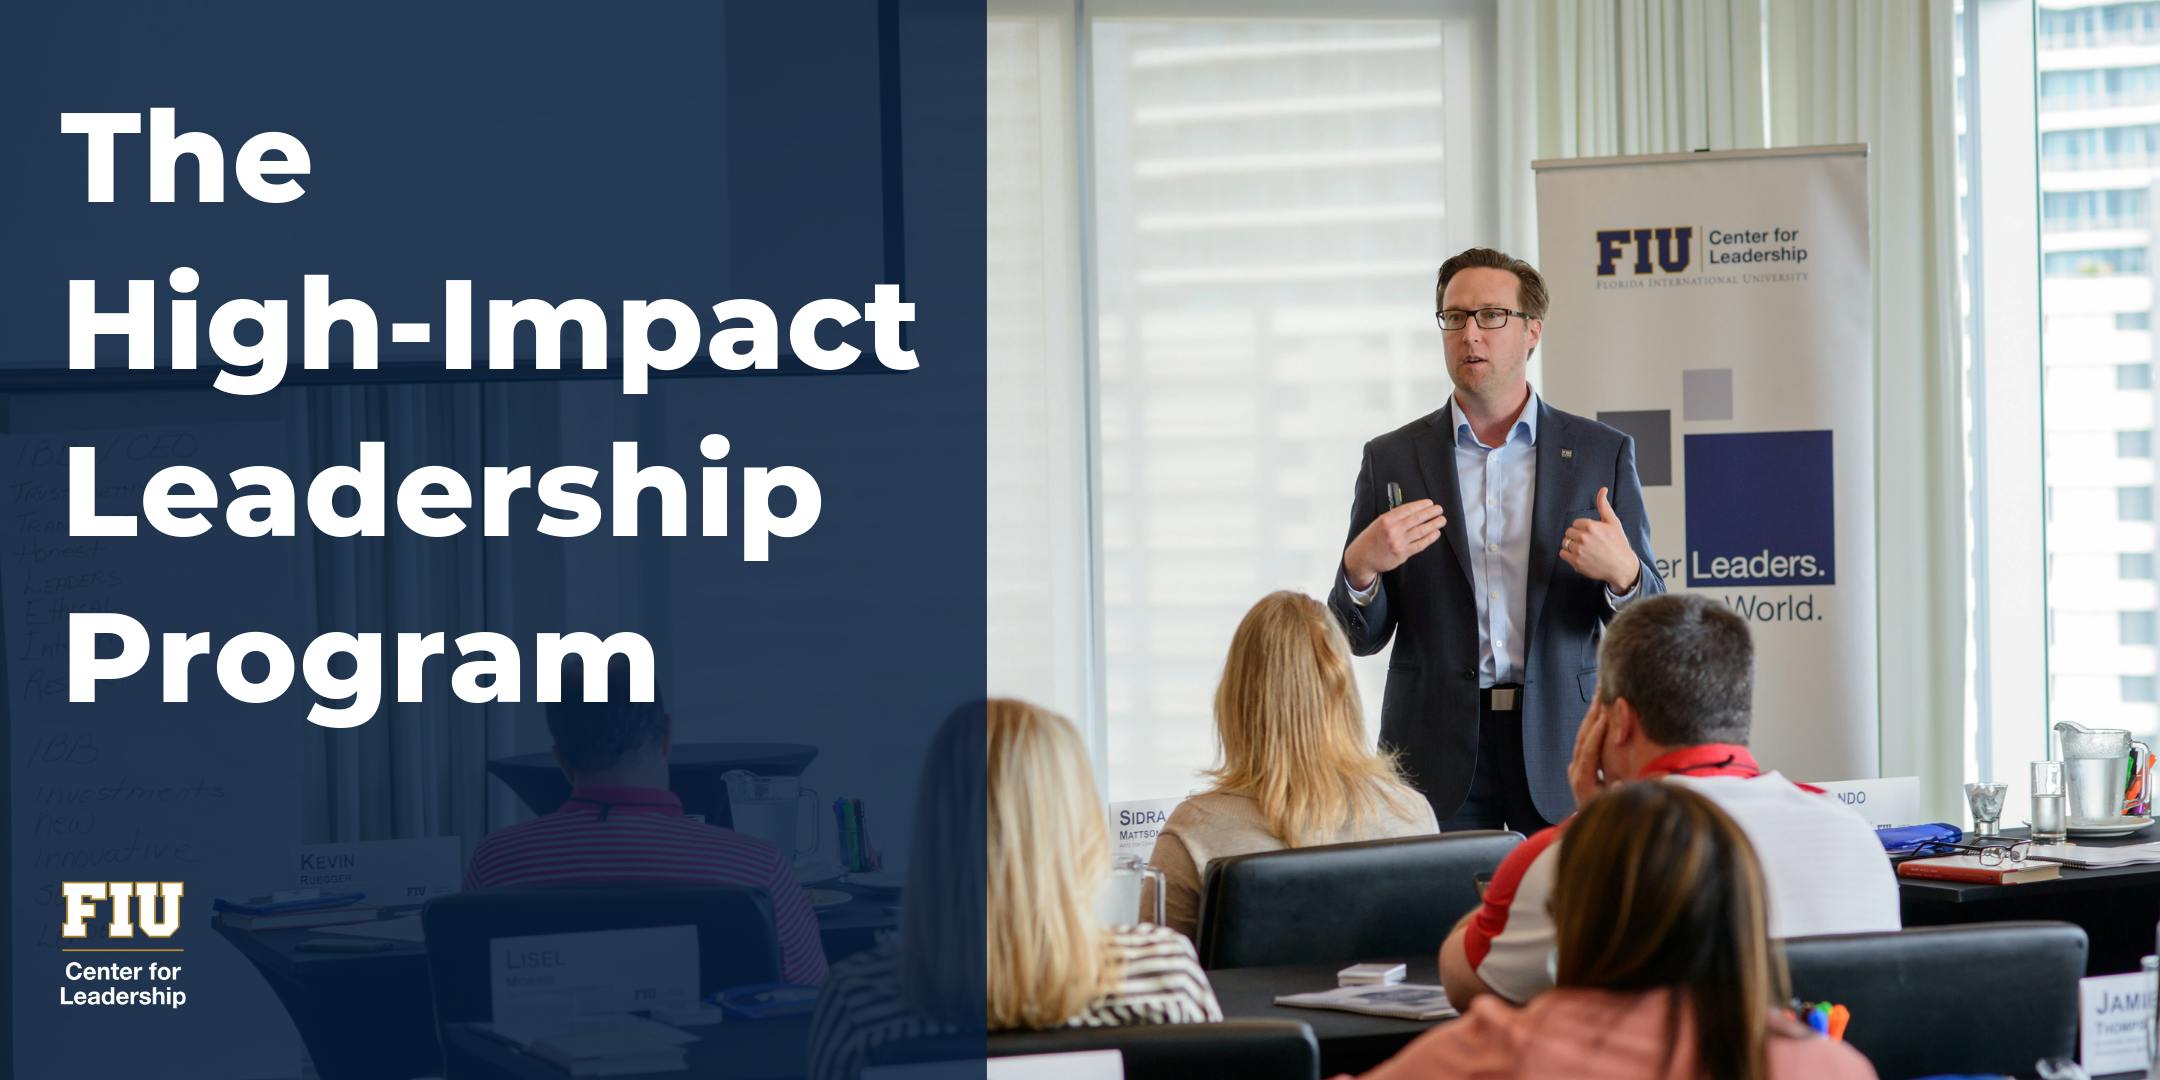 The High-Impact Leadership Program